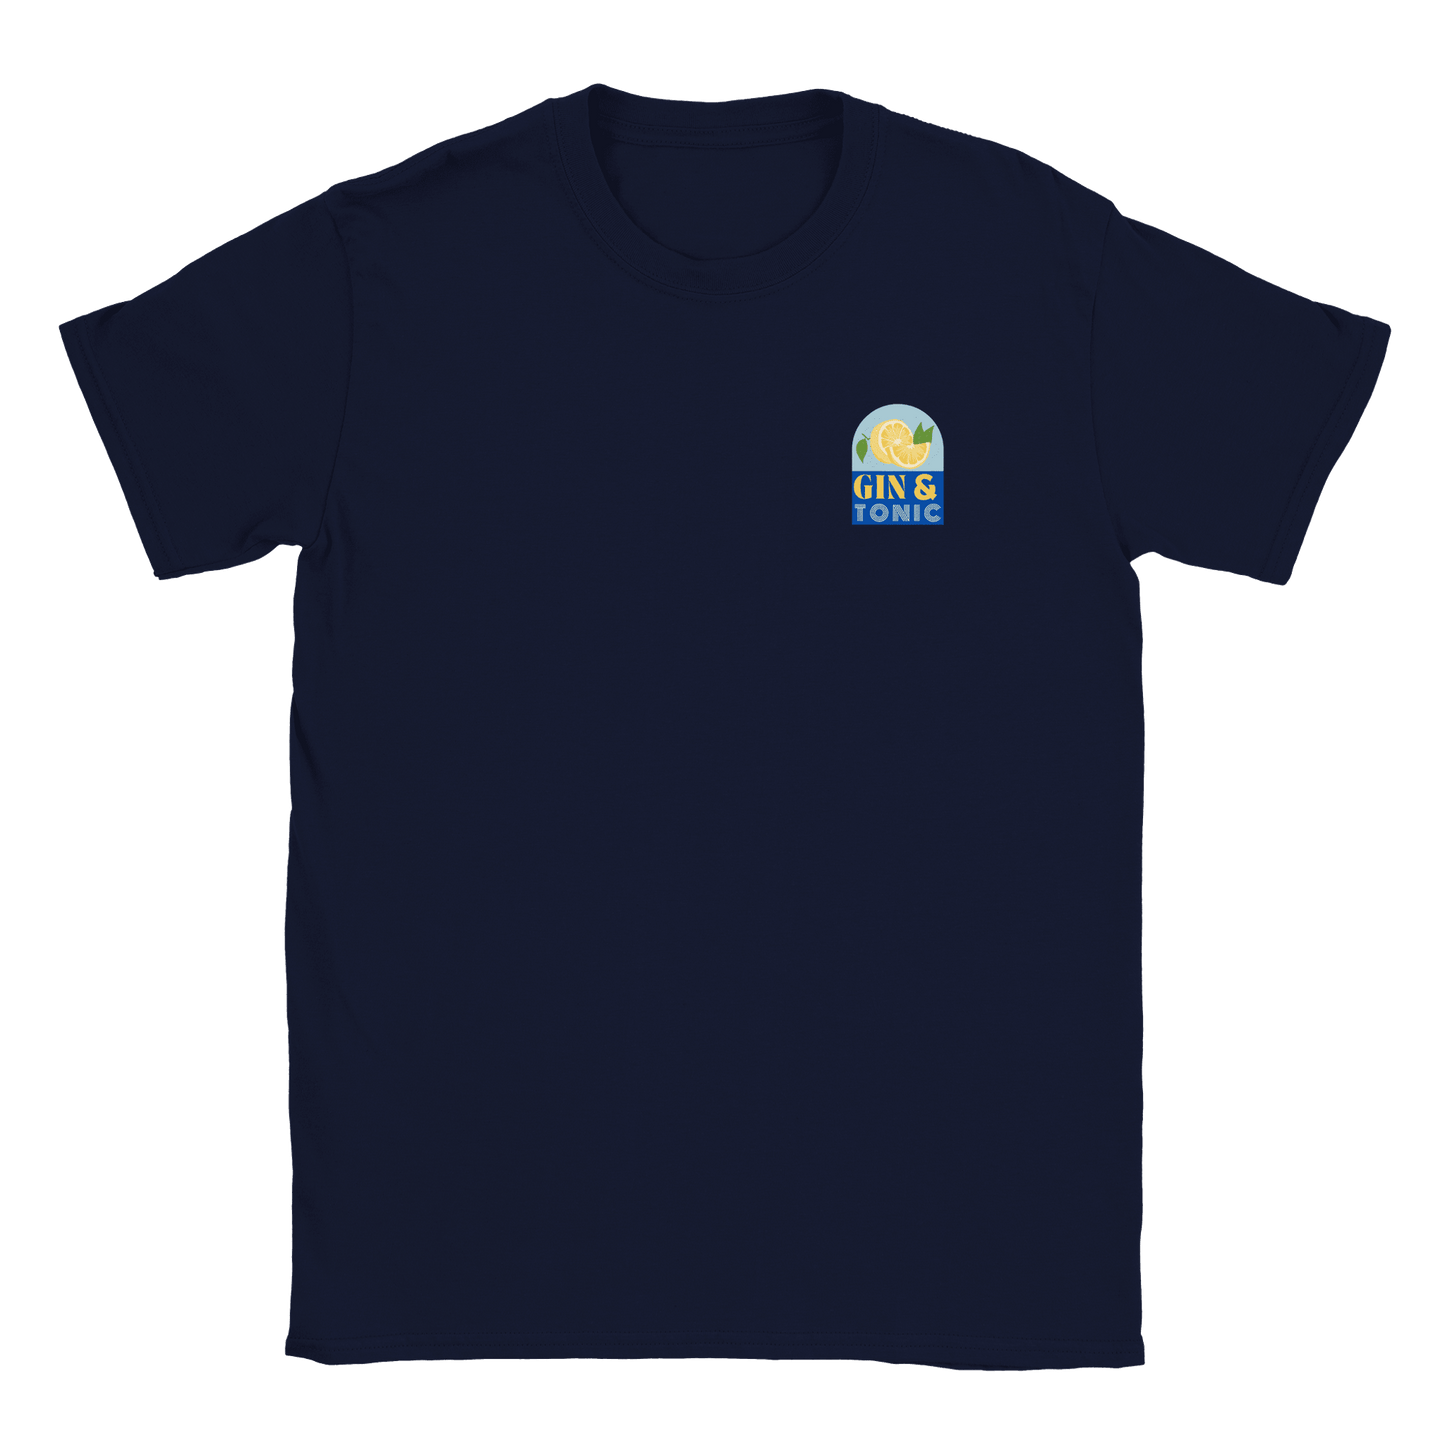 Gin & Tonic litet tryck - T-shirt Marinblå